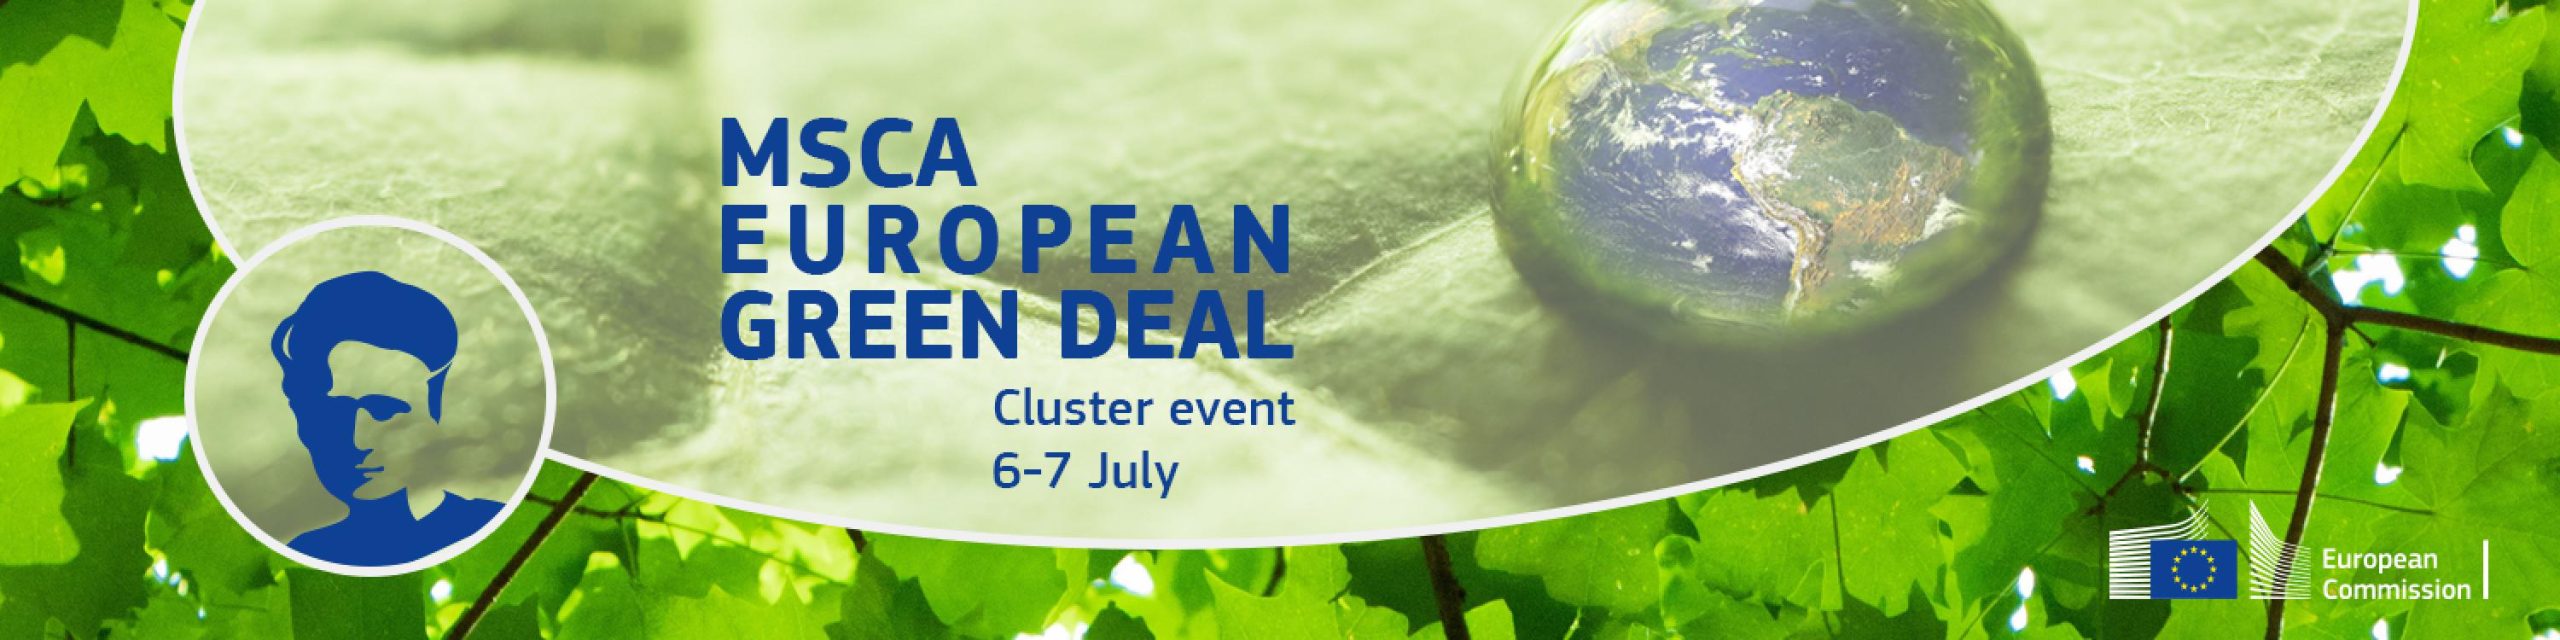 MSCA European Green Deal Cluster Event – Virtual exhibition